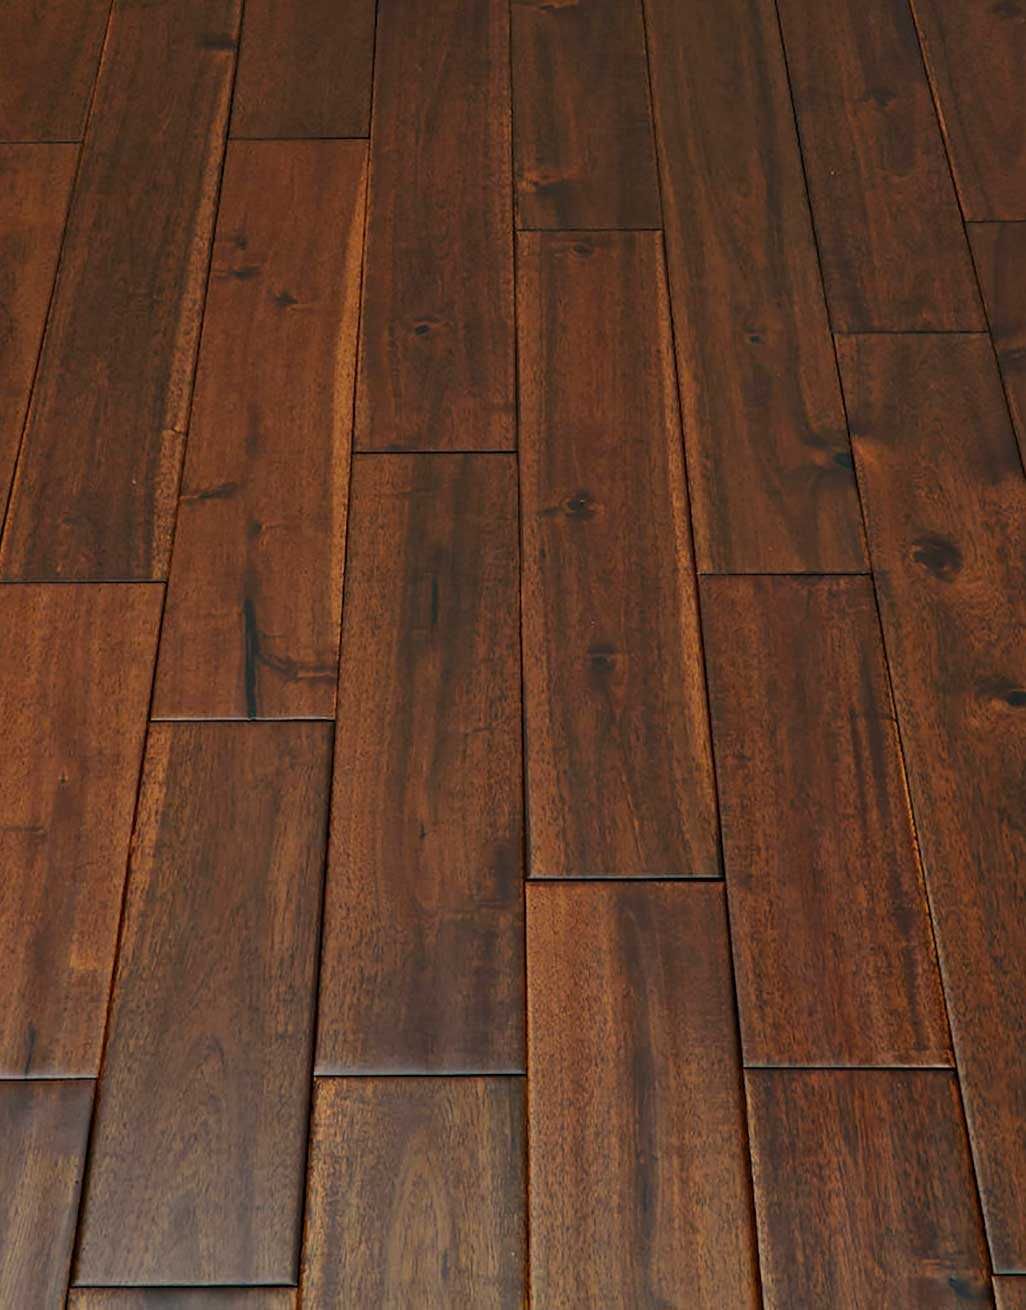 Deluxe Handsed Acacia Solid Wood, Natural Walnut Acacia Solid Hardwood Flooring